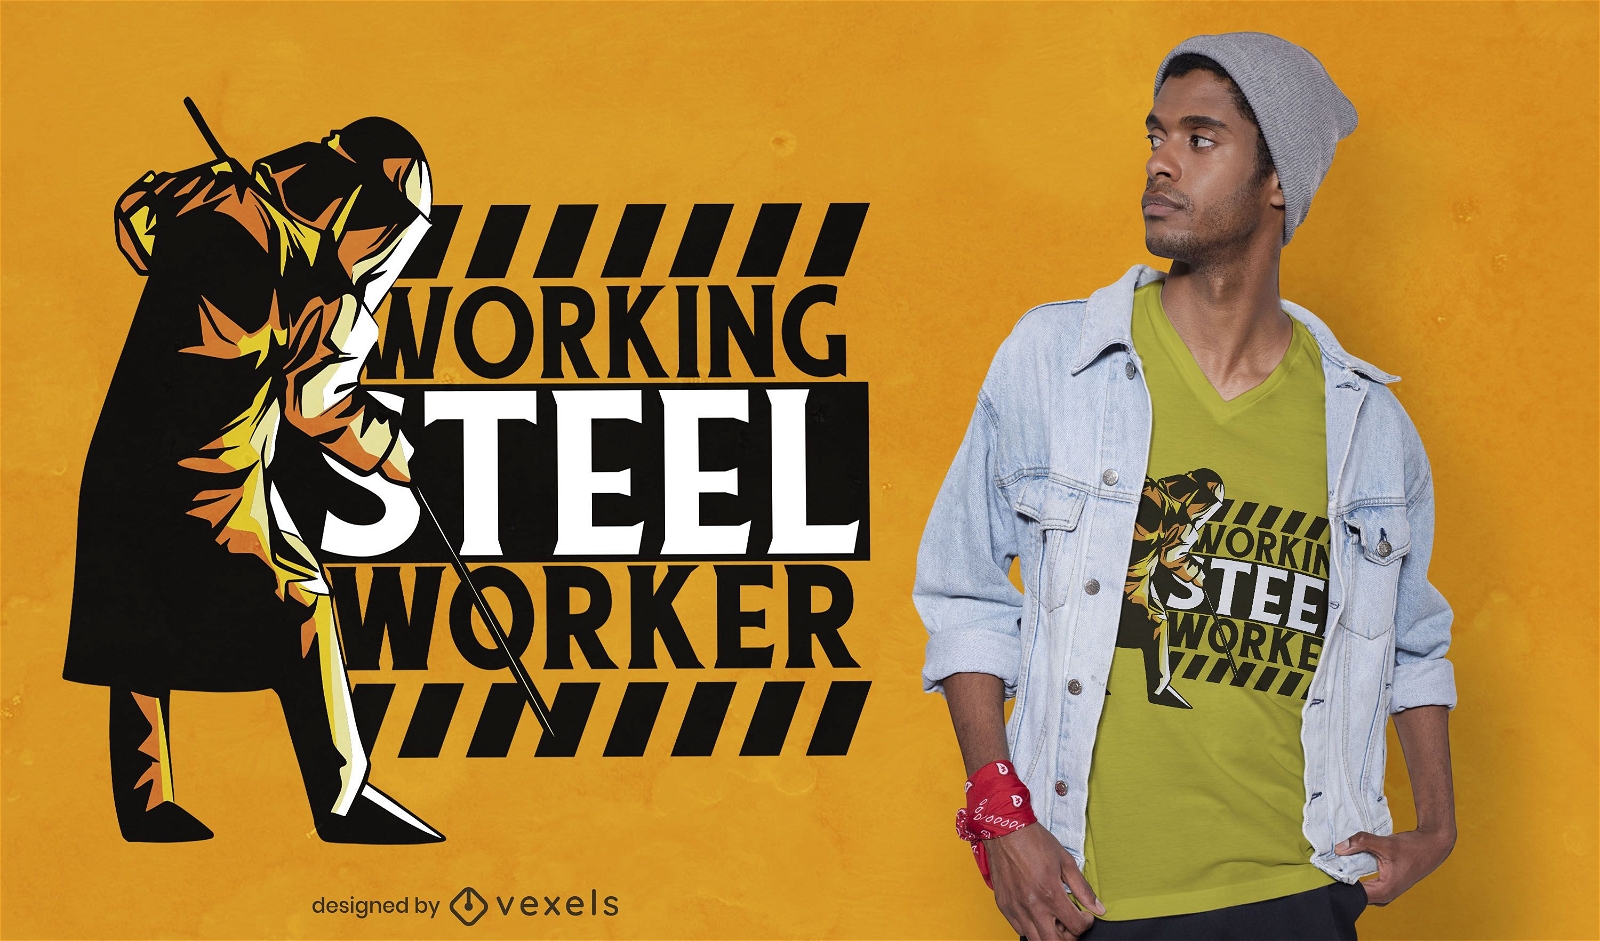 Working steel worker t-shirt design